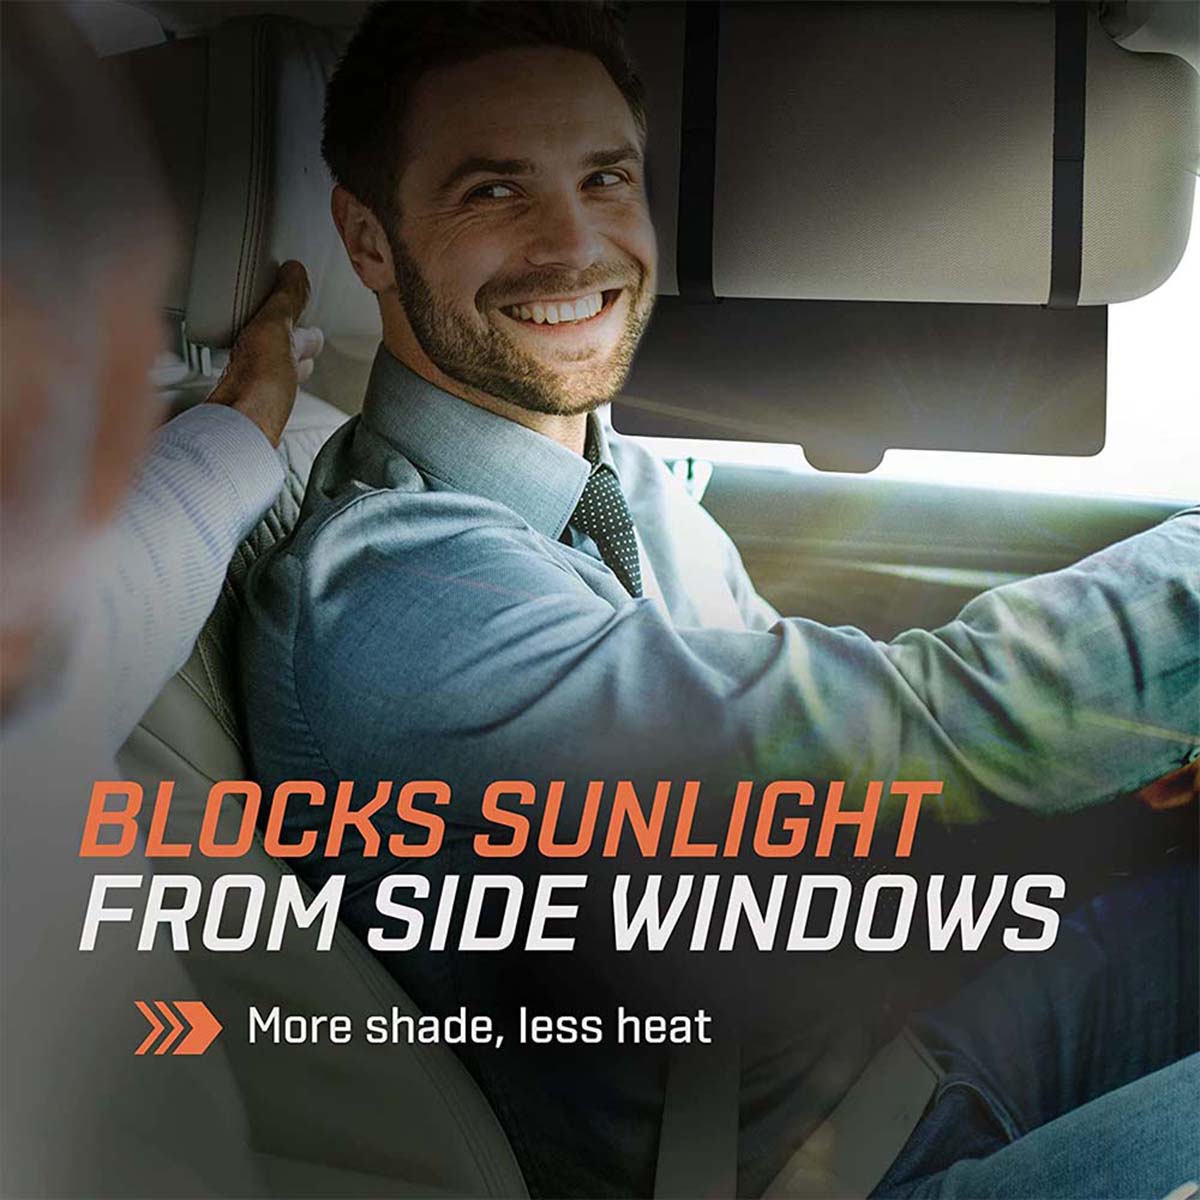 Polarized Sun Visor Sunshade Extender for Car with Polycarbonate Lens, Custom For Your Cars, Anti-Glare Car Sun Visor Protects from Sun Glare, Snow Blindness, UV Rays, Universal for Cars, SUVs TY13999